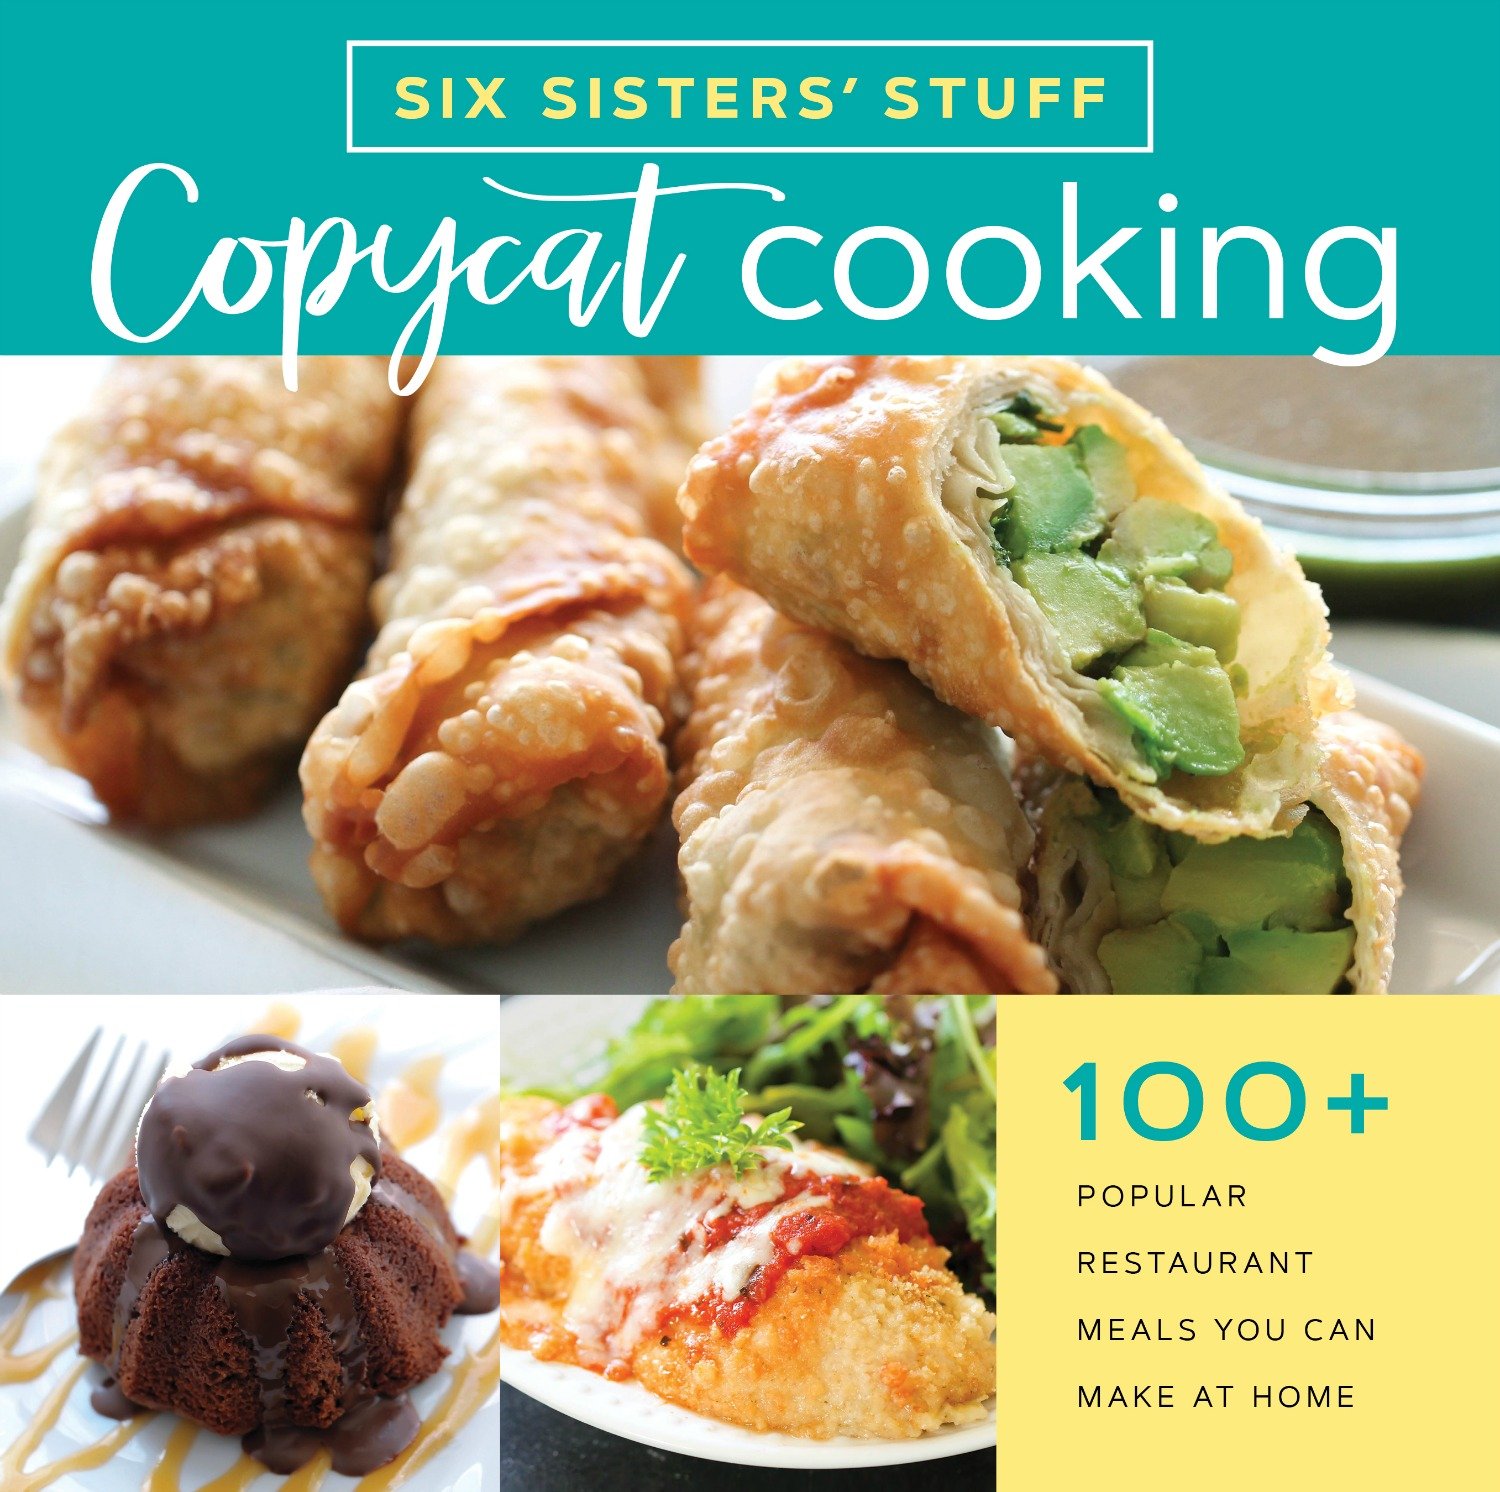 Six Sisters Stuff' copycat cooking cookbook